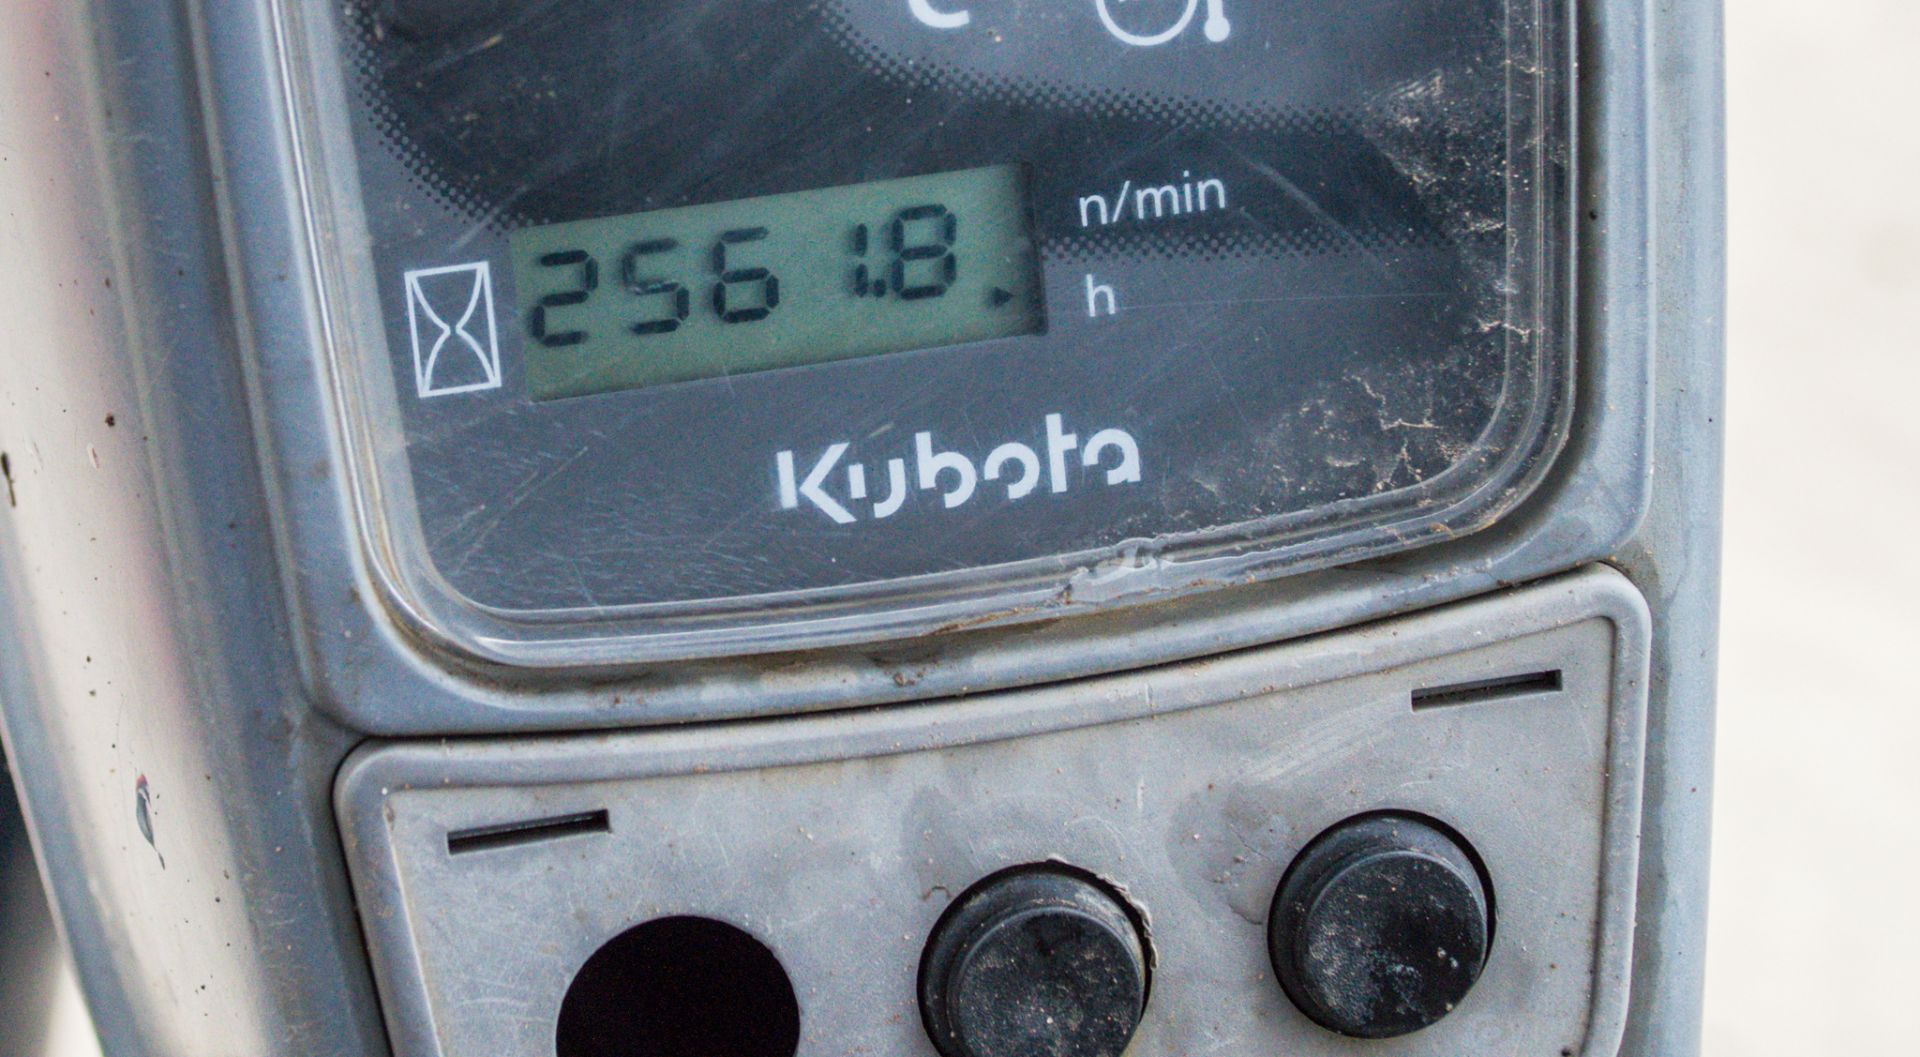 Kubota KX015-4 1.5 tonne rubber tracked mini excavator Year: 2015 S/N: 58351 Recorded Hour: 2561 - Image 21 of 21